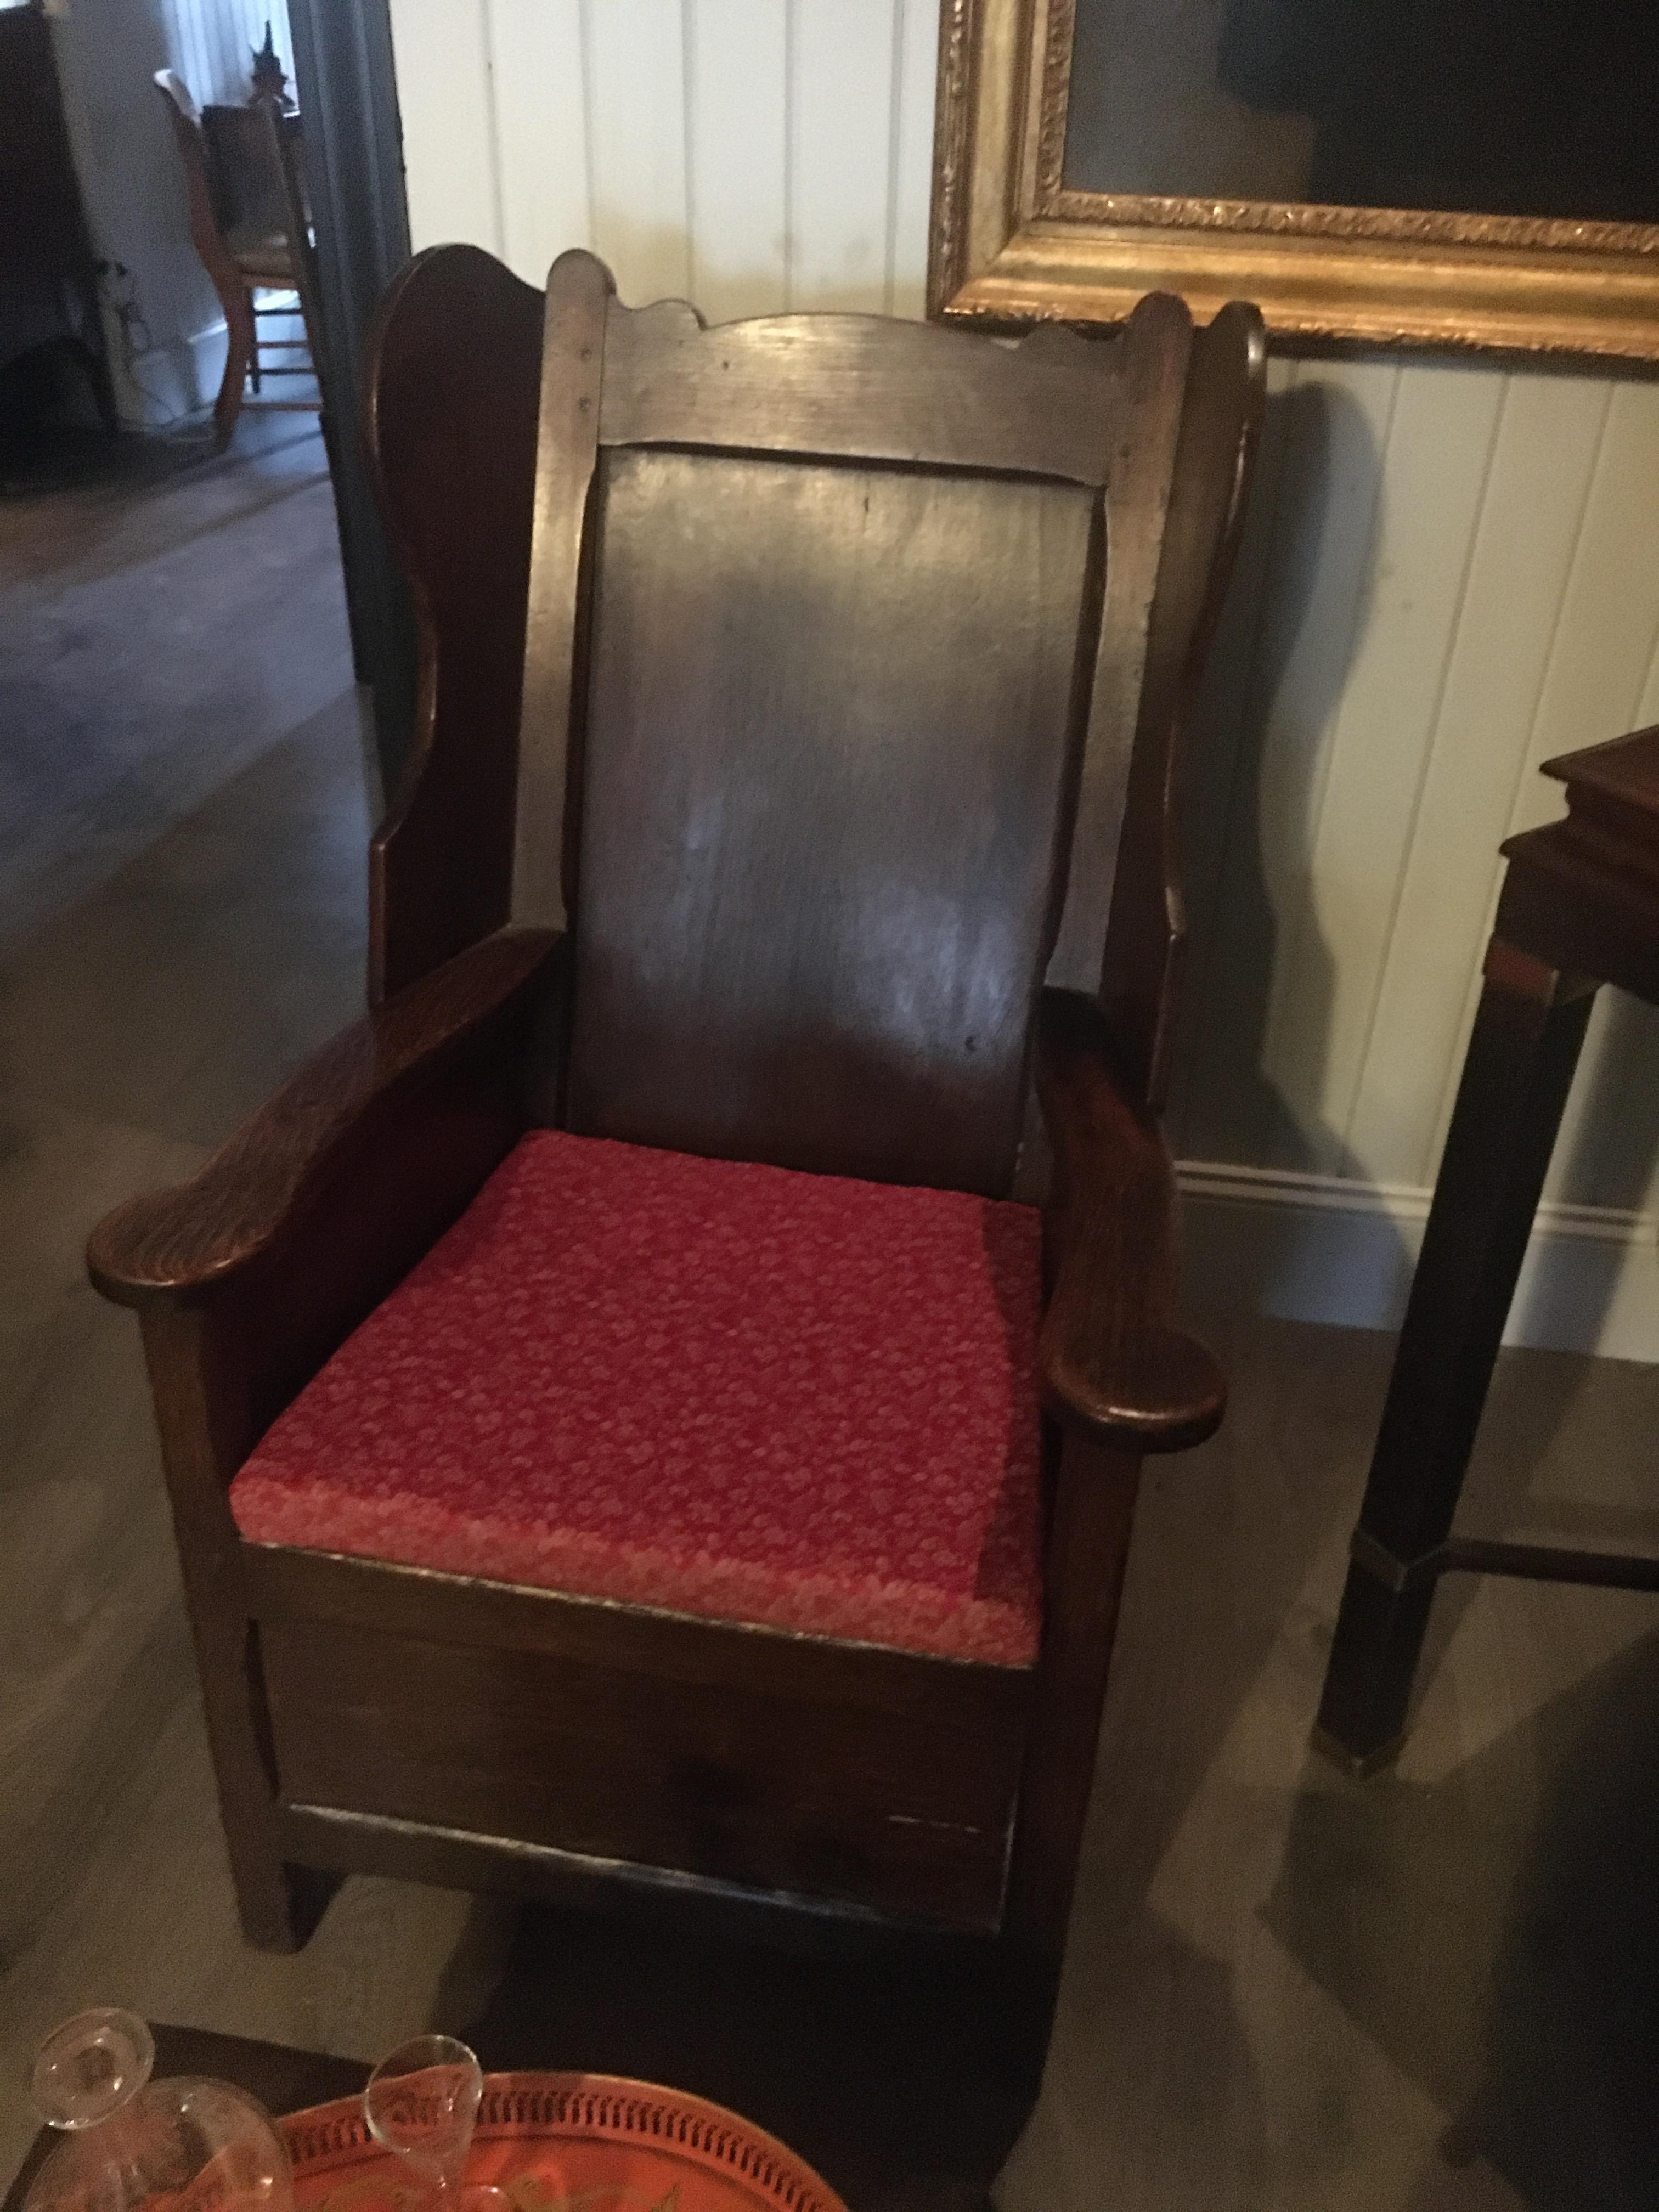 lambing chair history